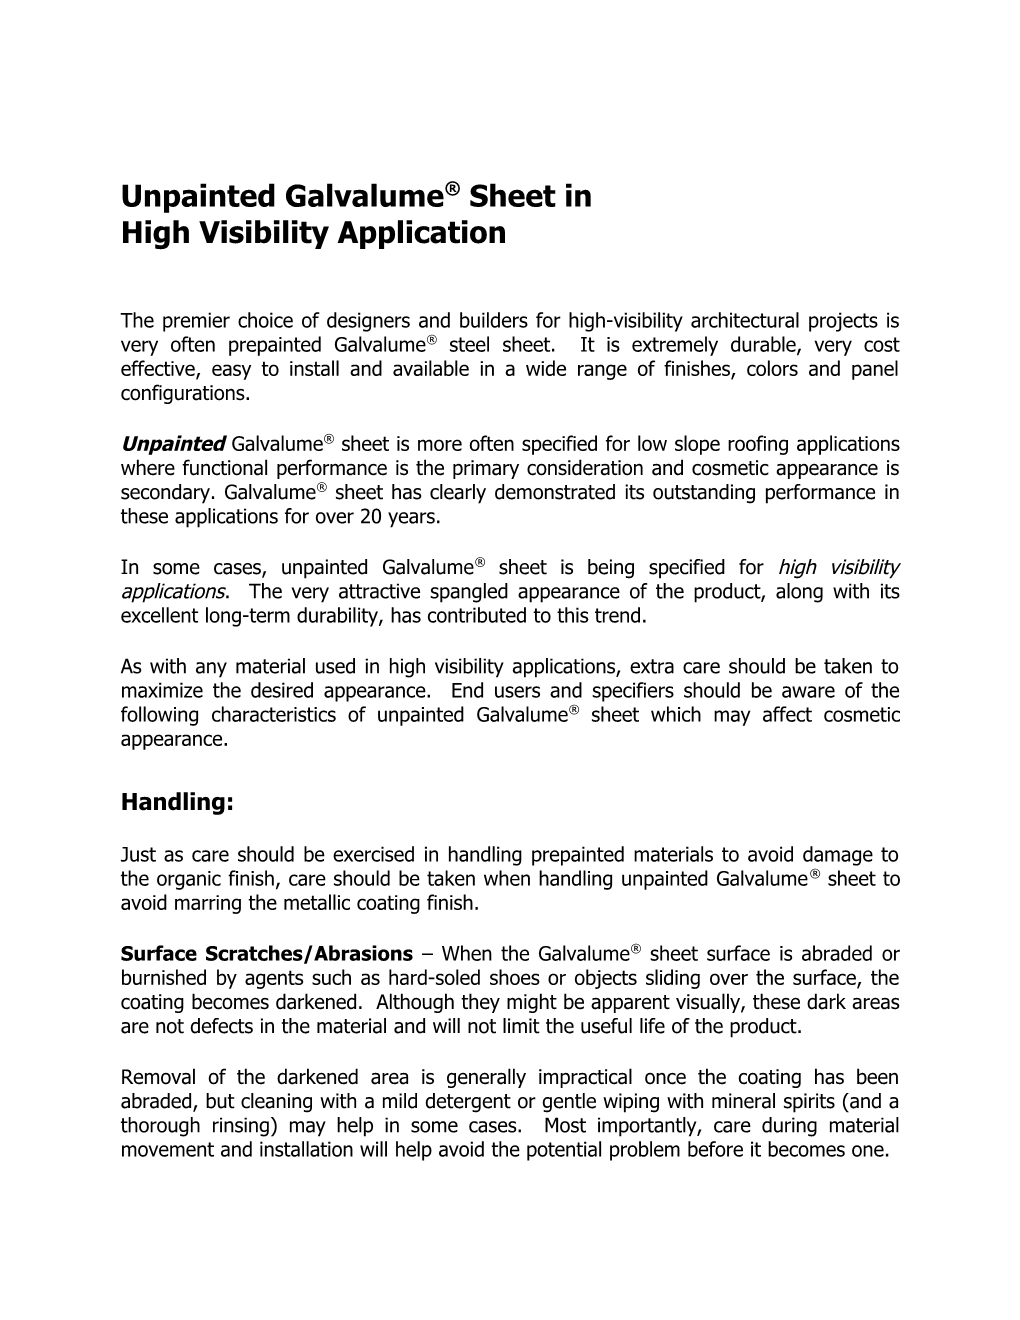 Unpainted Galvalume Sheet In